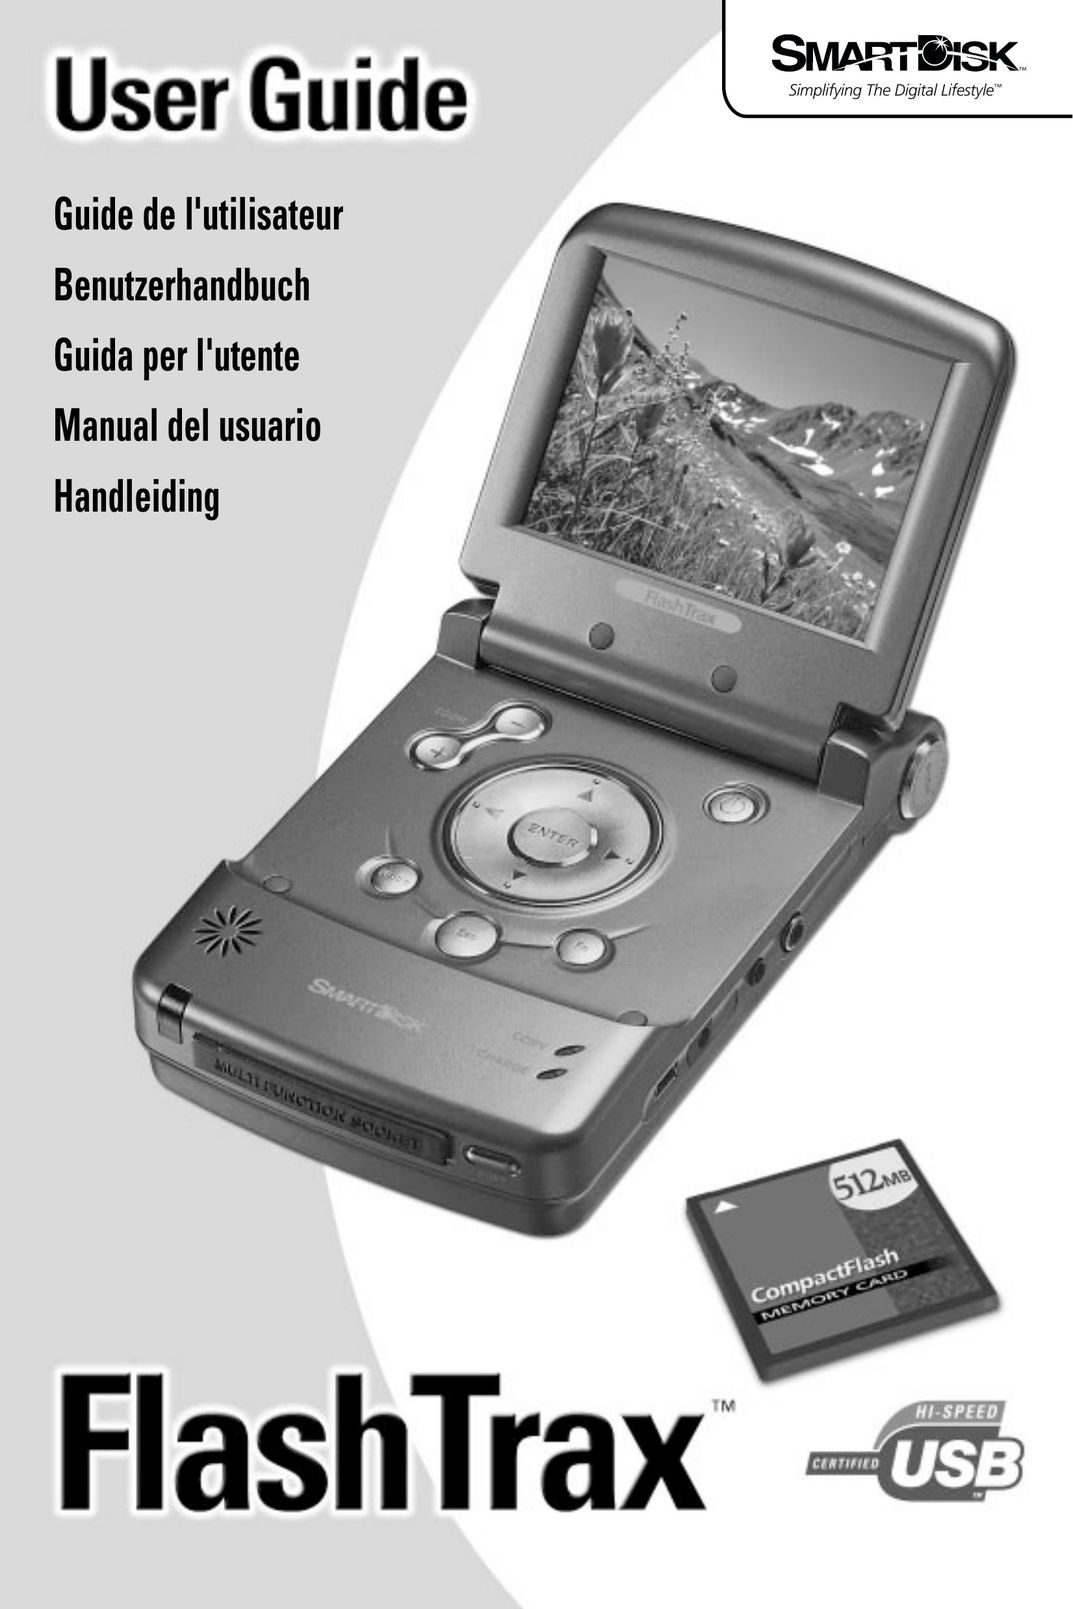 SmartDisk MP3 MP3 Player User Manual